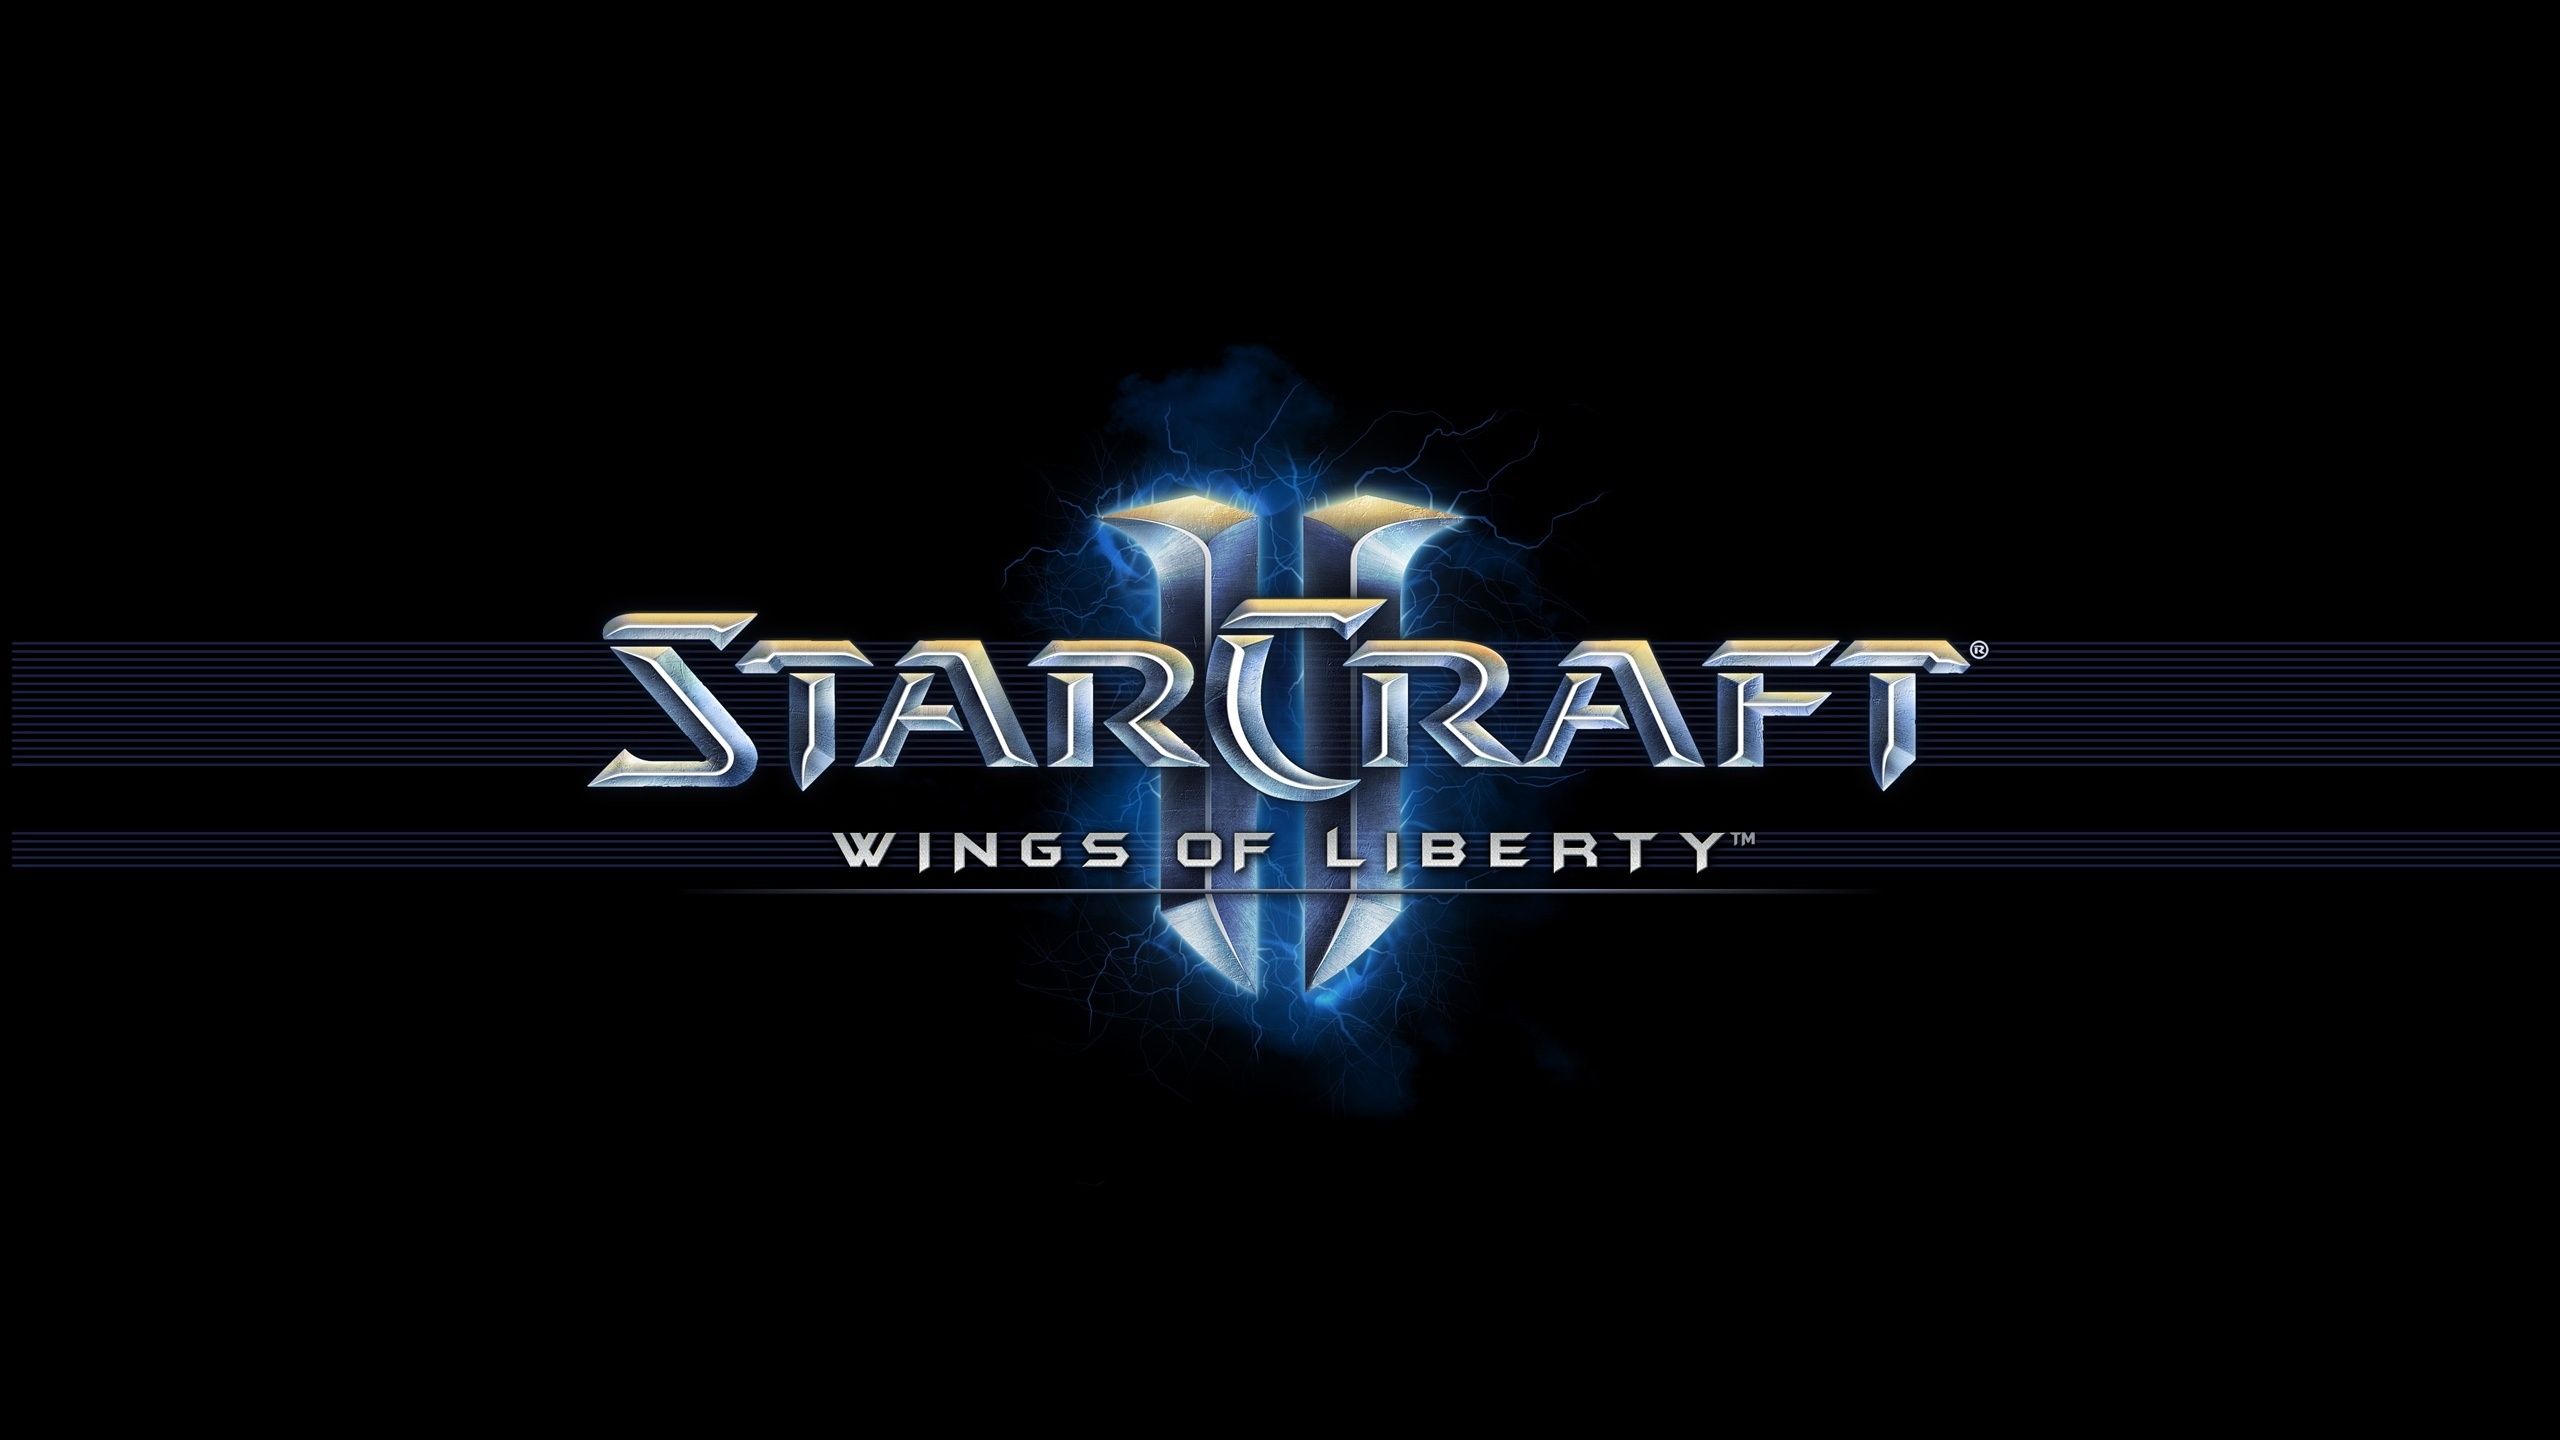 Starcraft 2 for 2560x1440 HDTV resolution